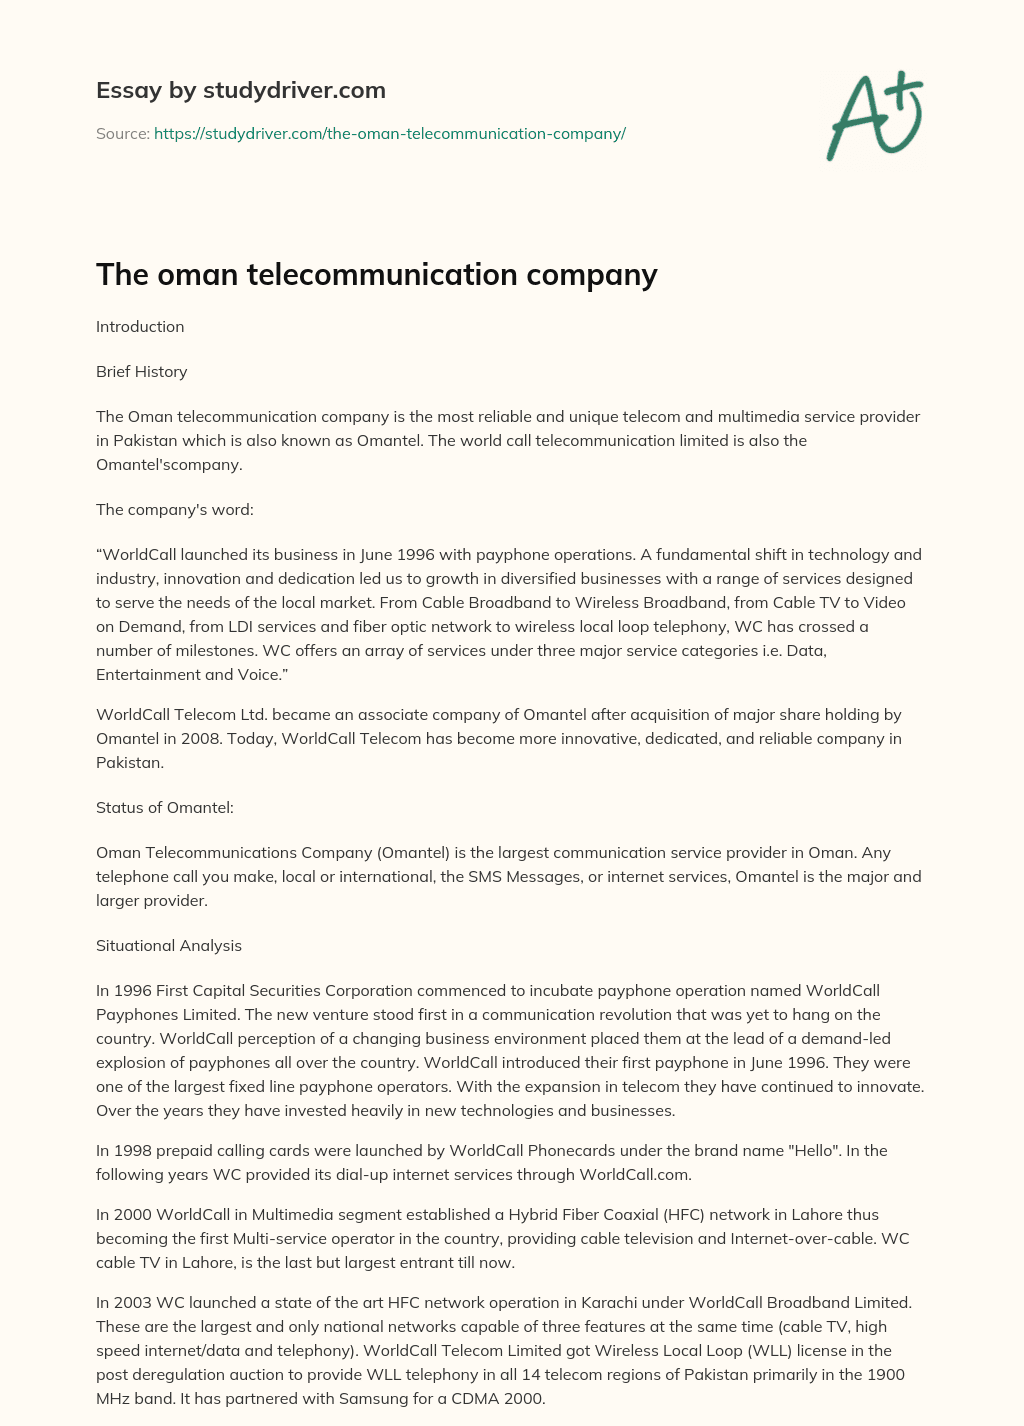 The Oman Telecommunication Company essay